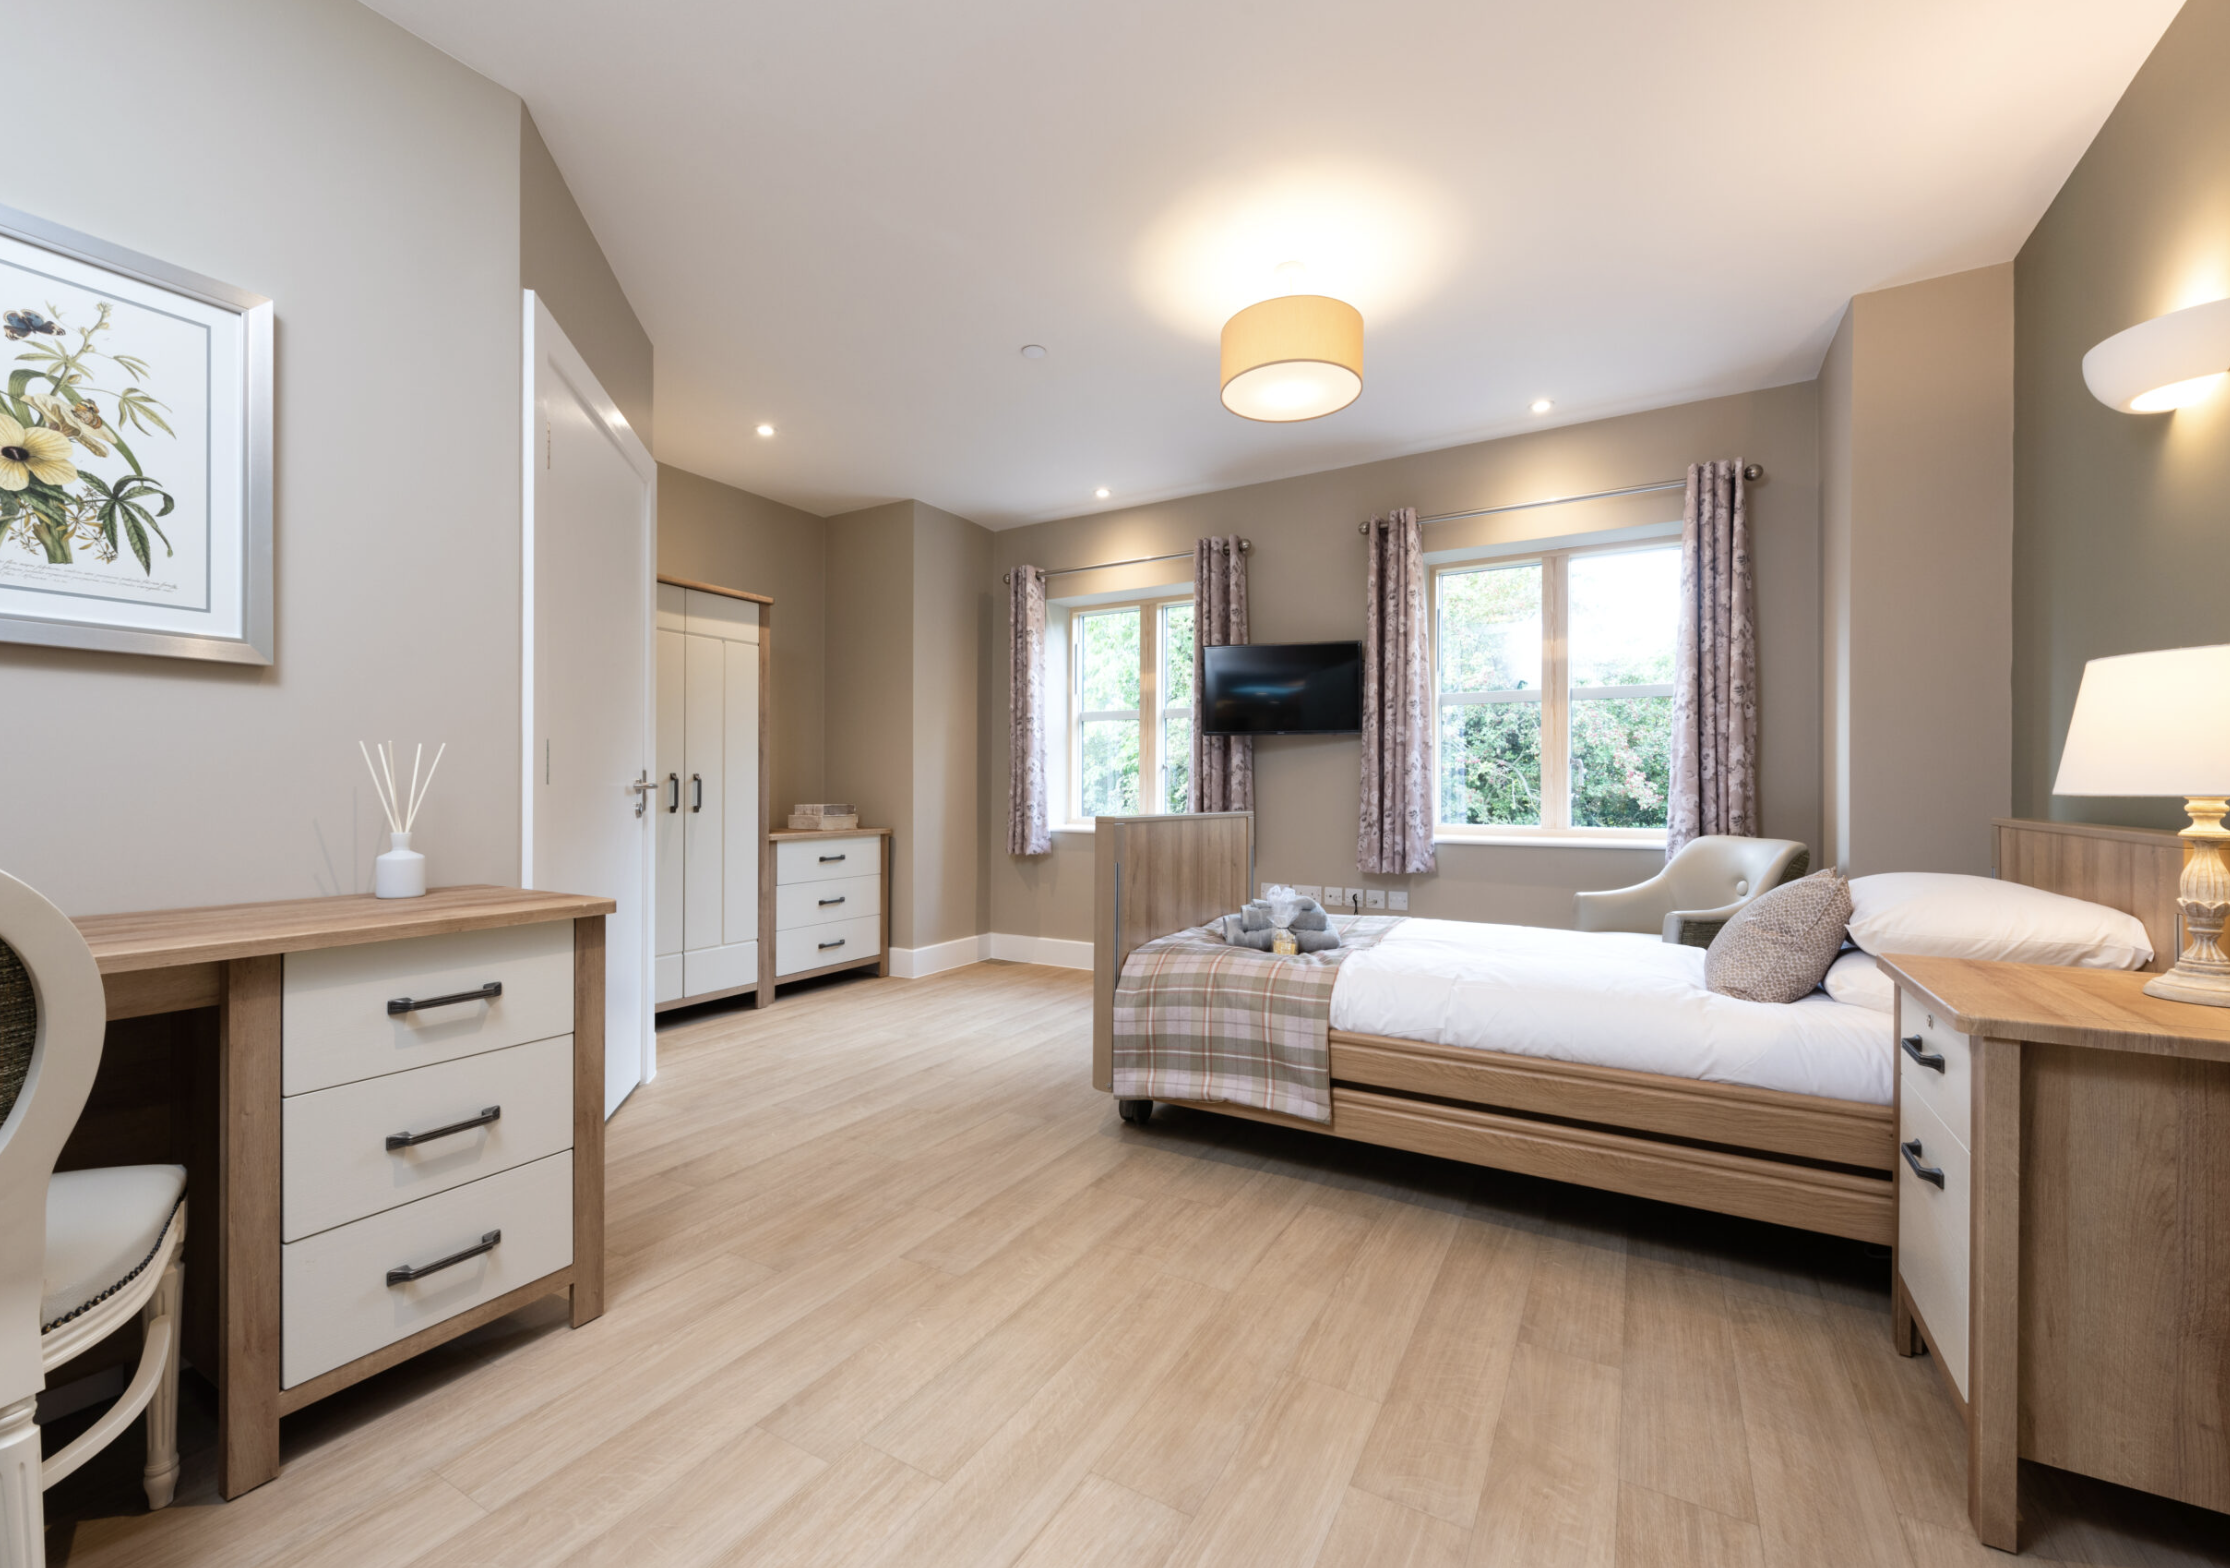 Bedroom of Riverdale care home in Braintree, Essex